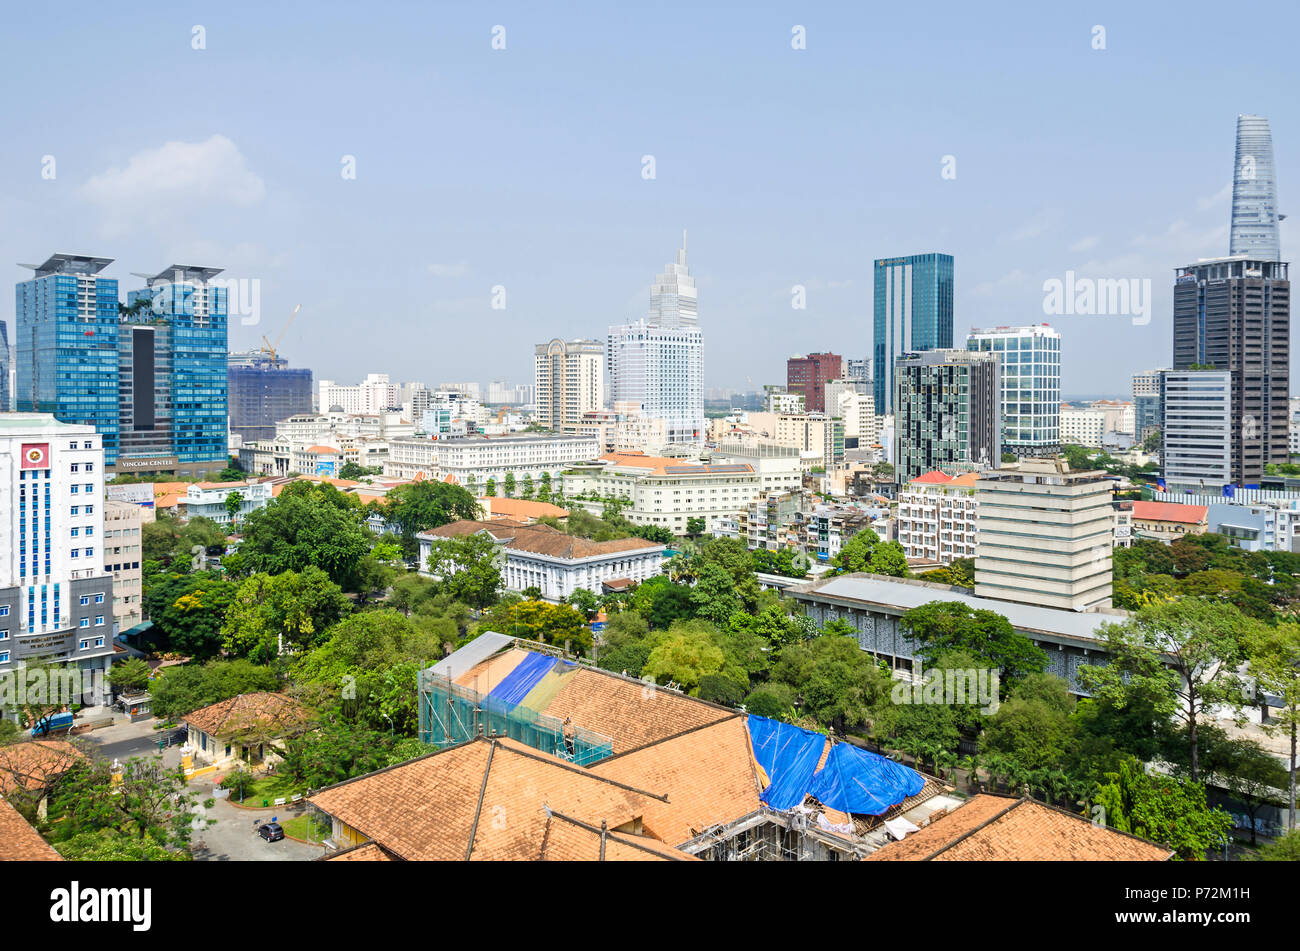 Ho Chi Minh City, Vietnam - Am 4. April, 2018: Ho Chi Minh City Metropole mit Vincom Center Shopping Mall auf der linken Seite, Caravelle Hotel, Sheraton Hotel i Stockfoto